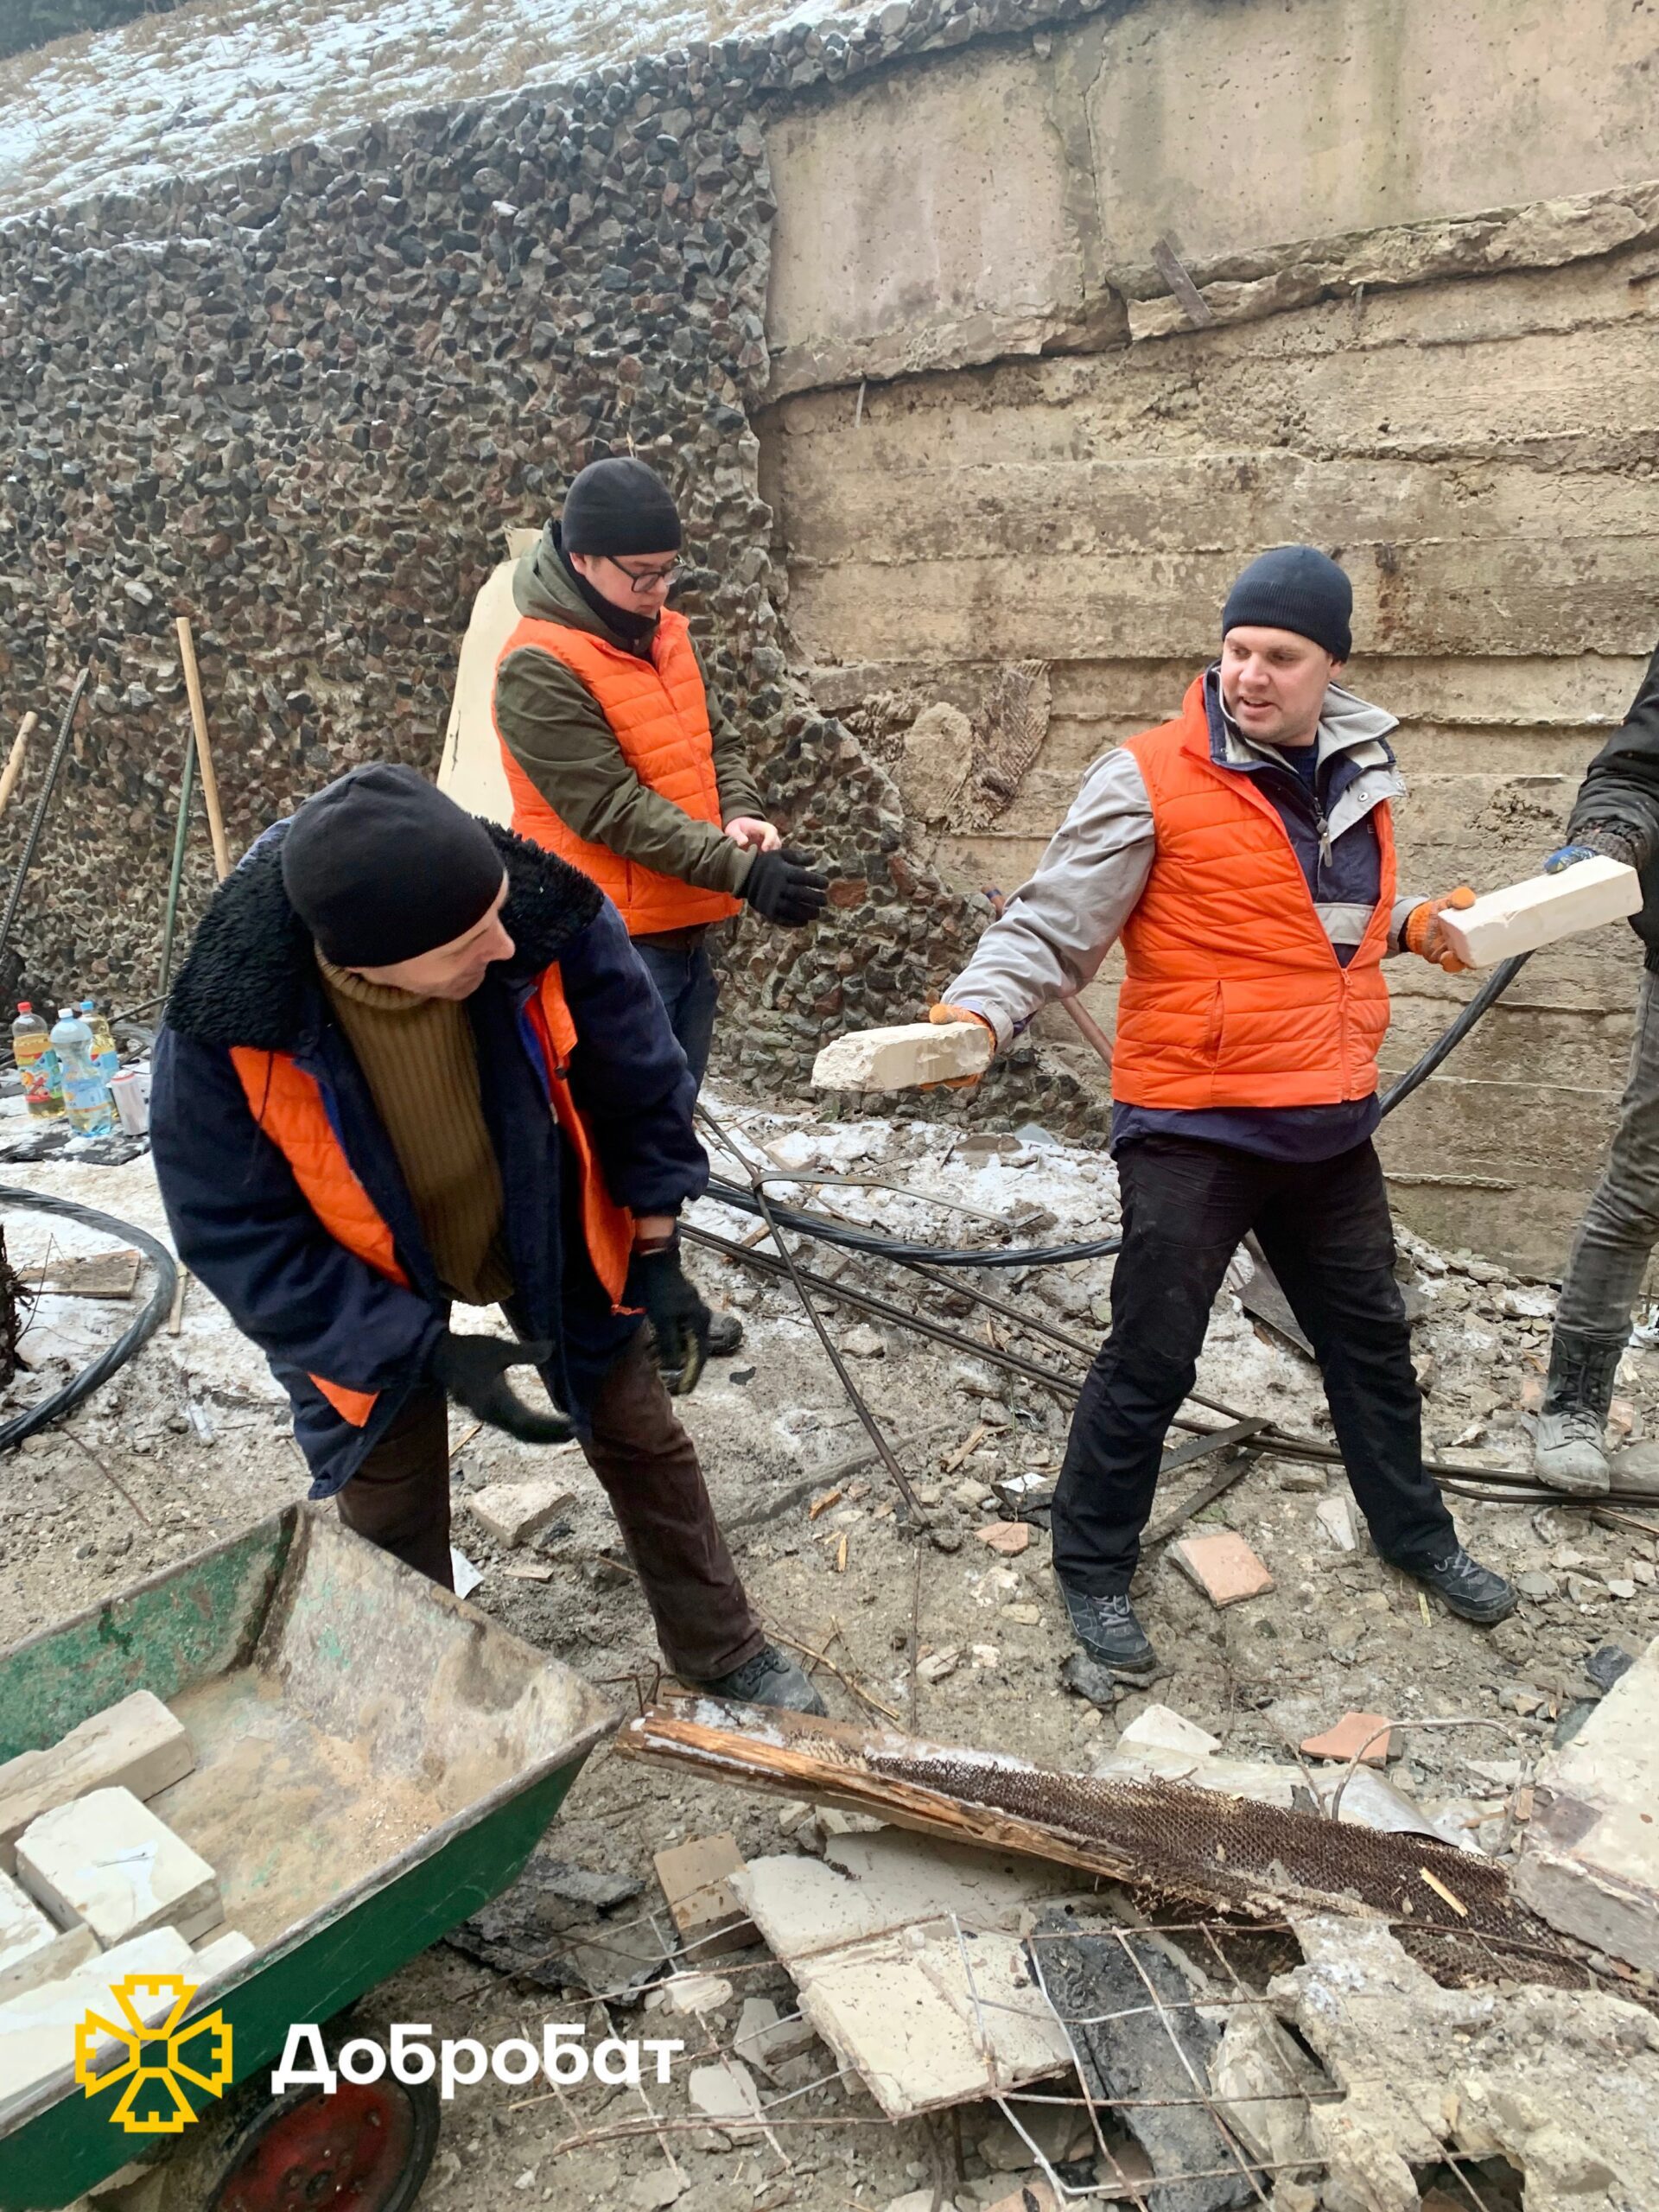 Dobrobat reports urgent reconstruction on the last week of February